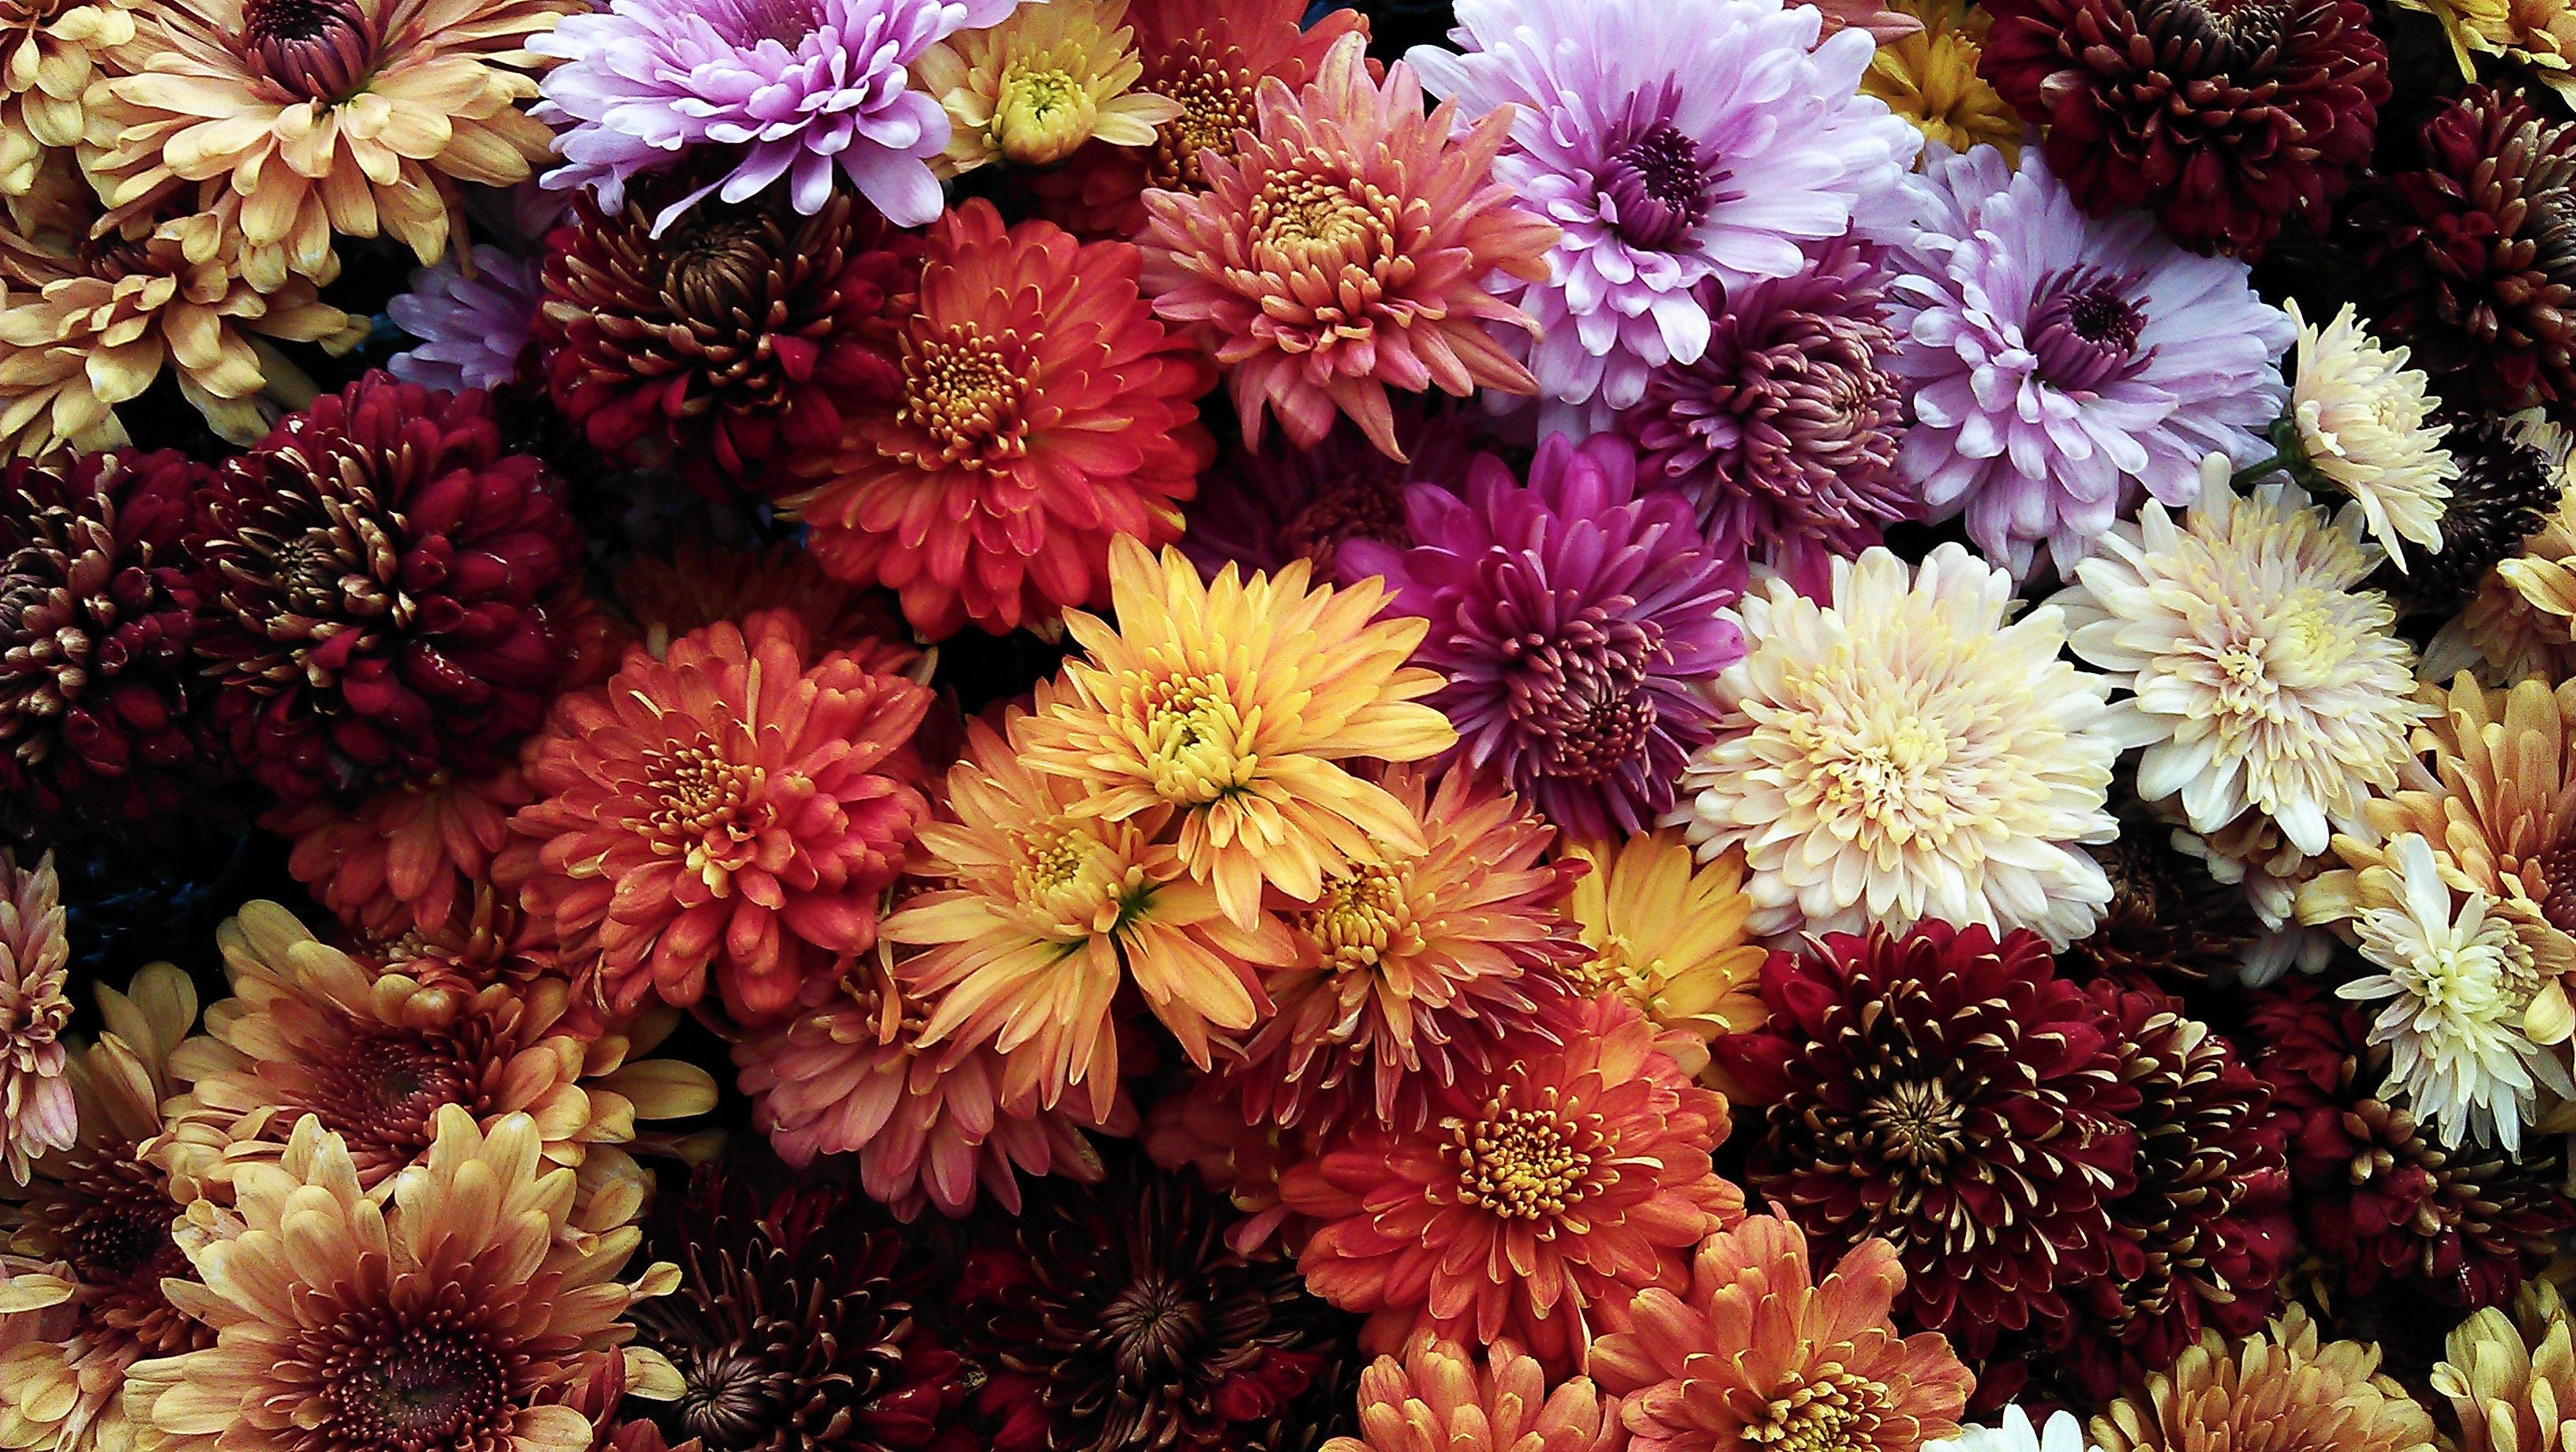 Chrysanthemum | Source: Unsplash